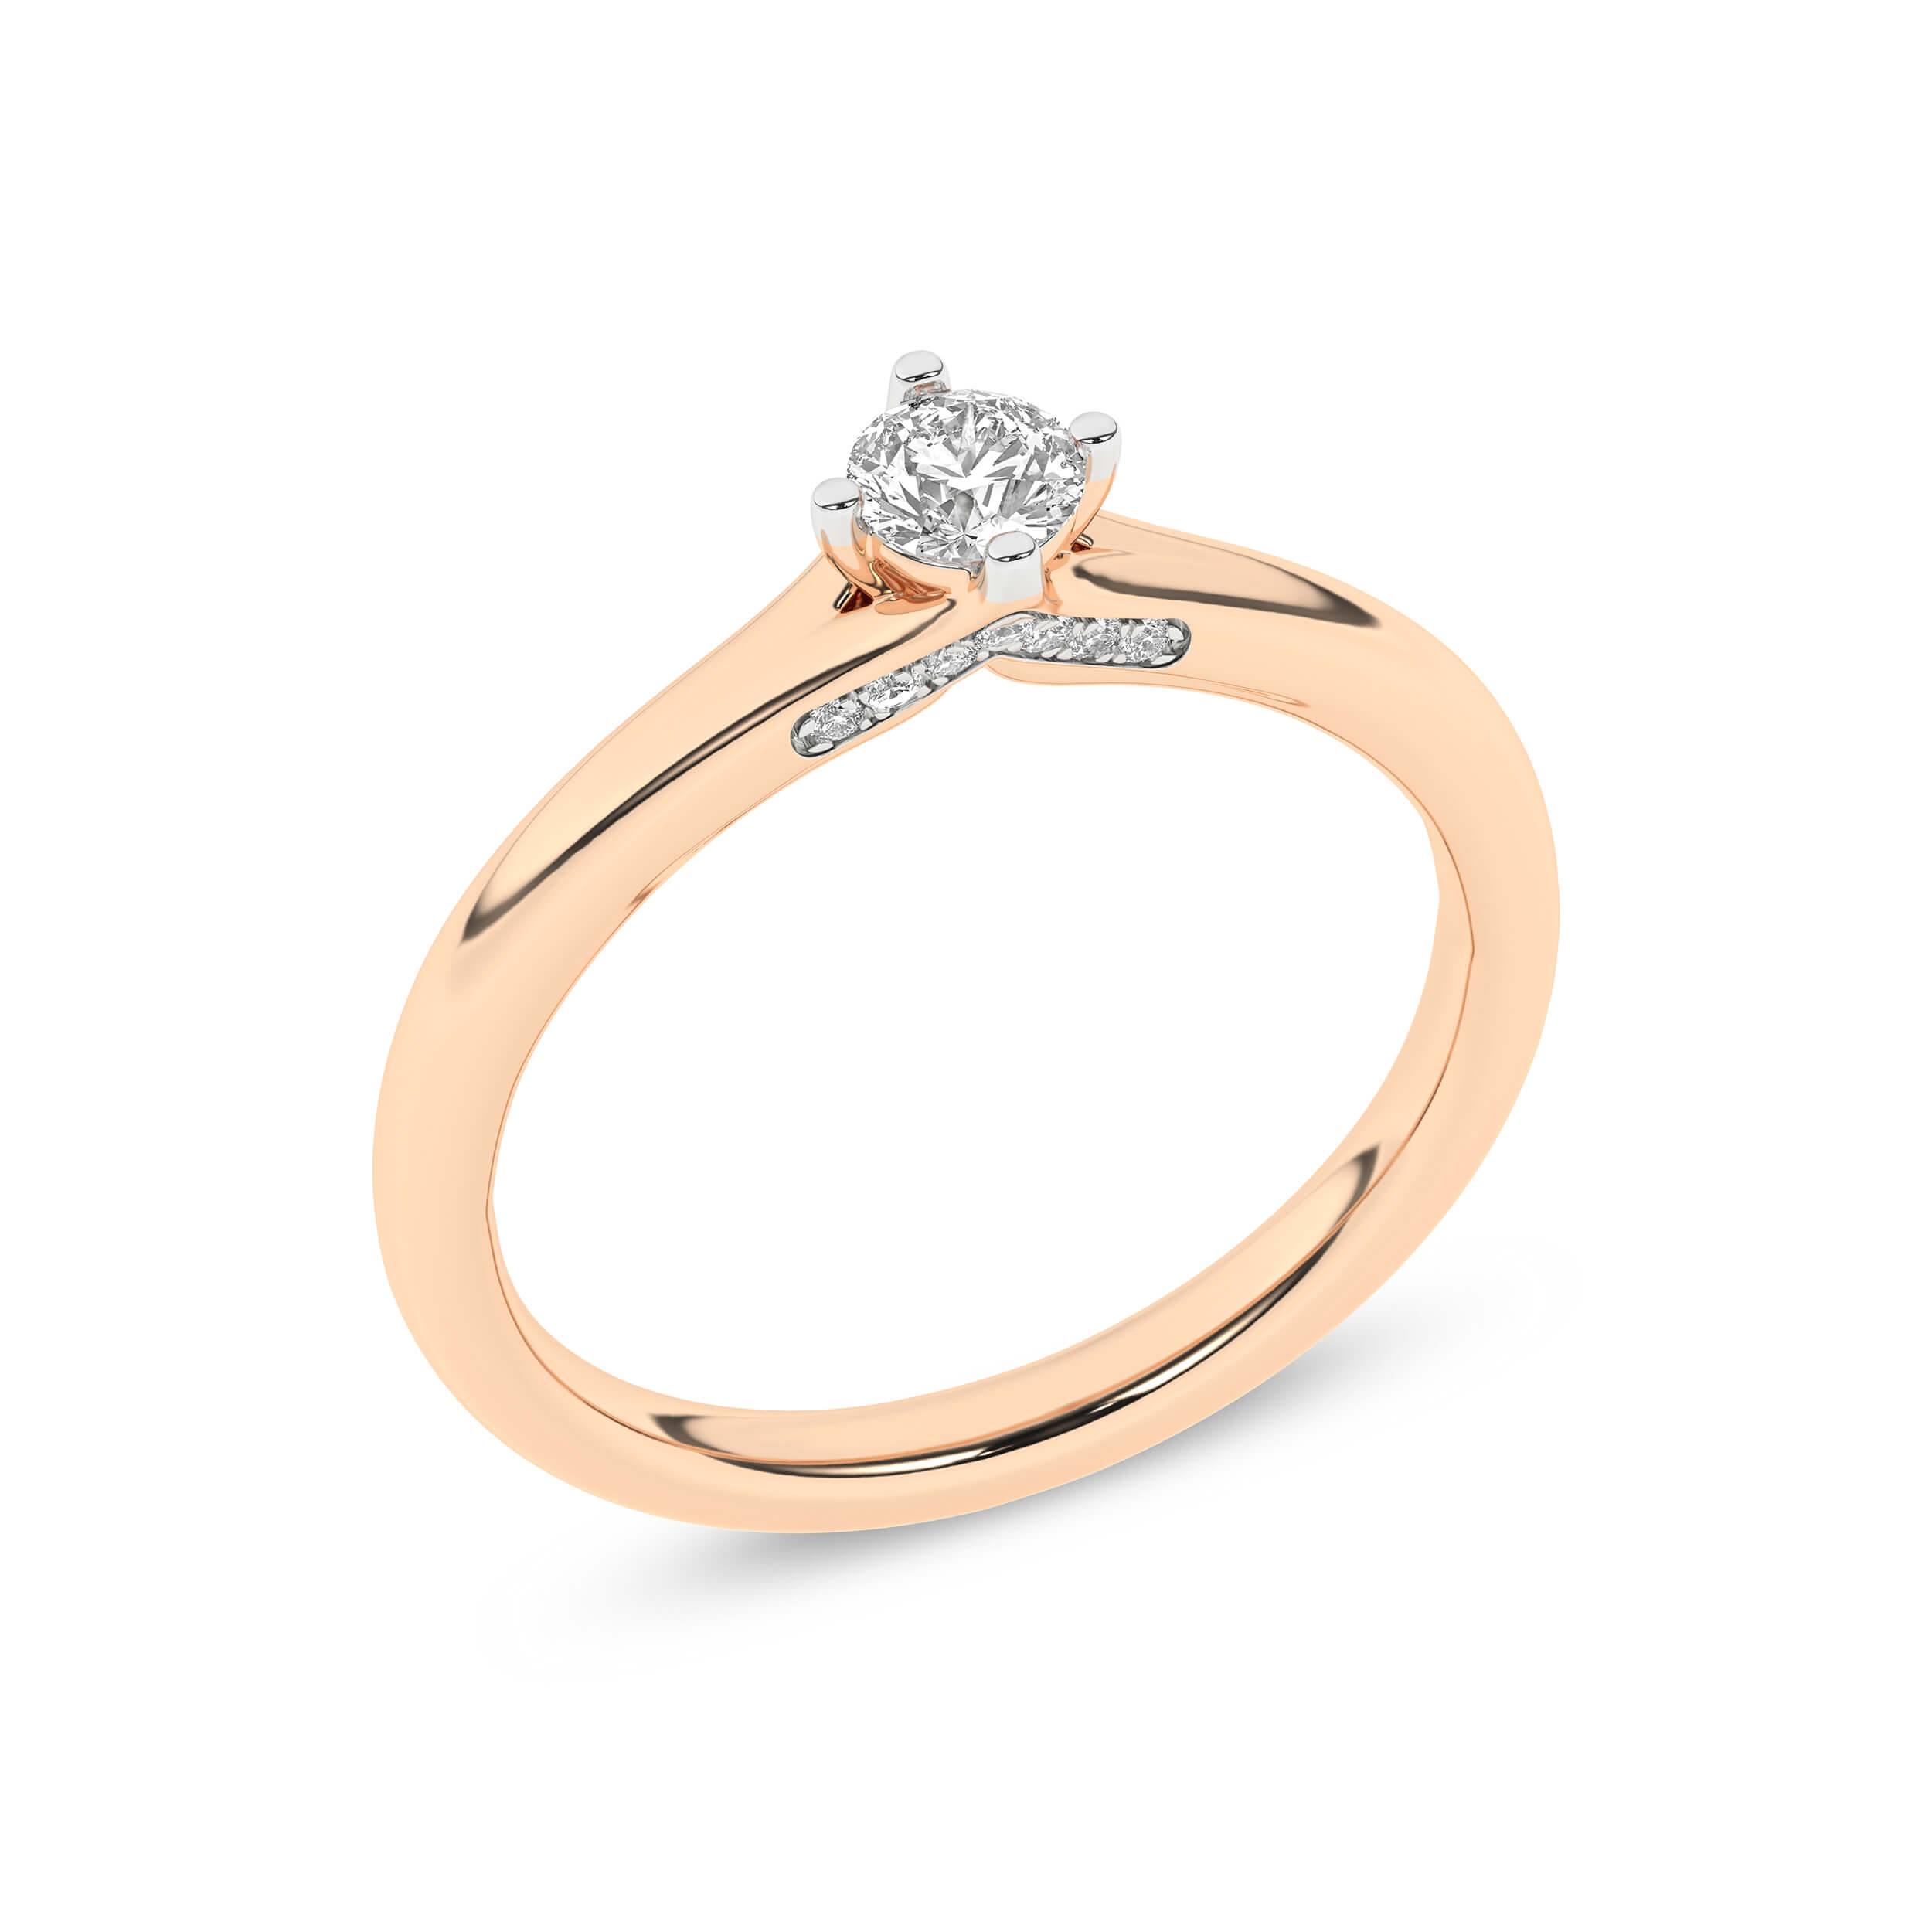 Inel de logodna din Aur Roz 14K cu Diamant 0.25Ct, articol RS0863, previzualizare foto 4